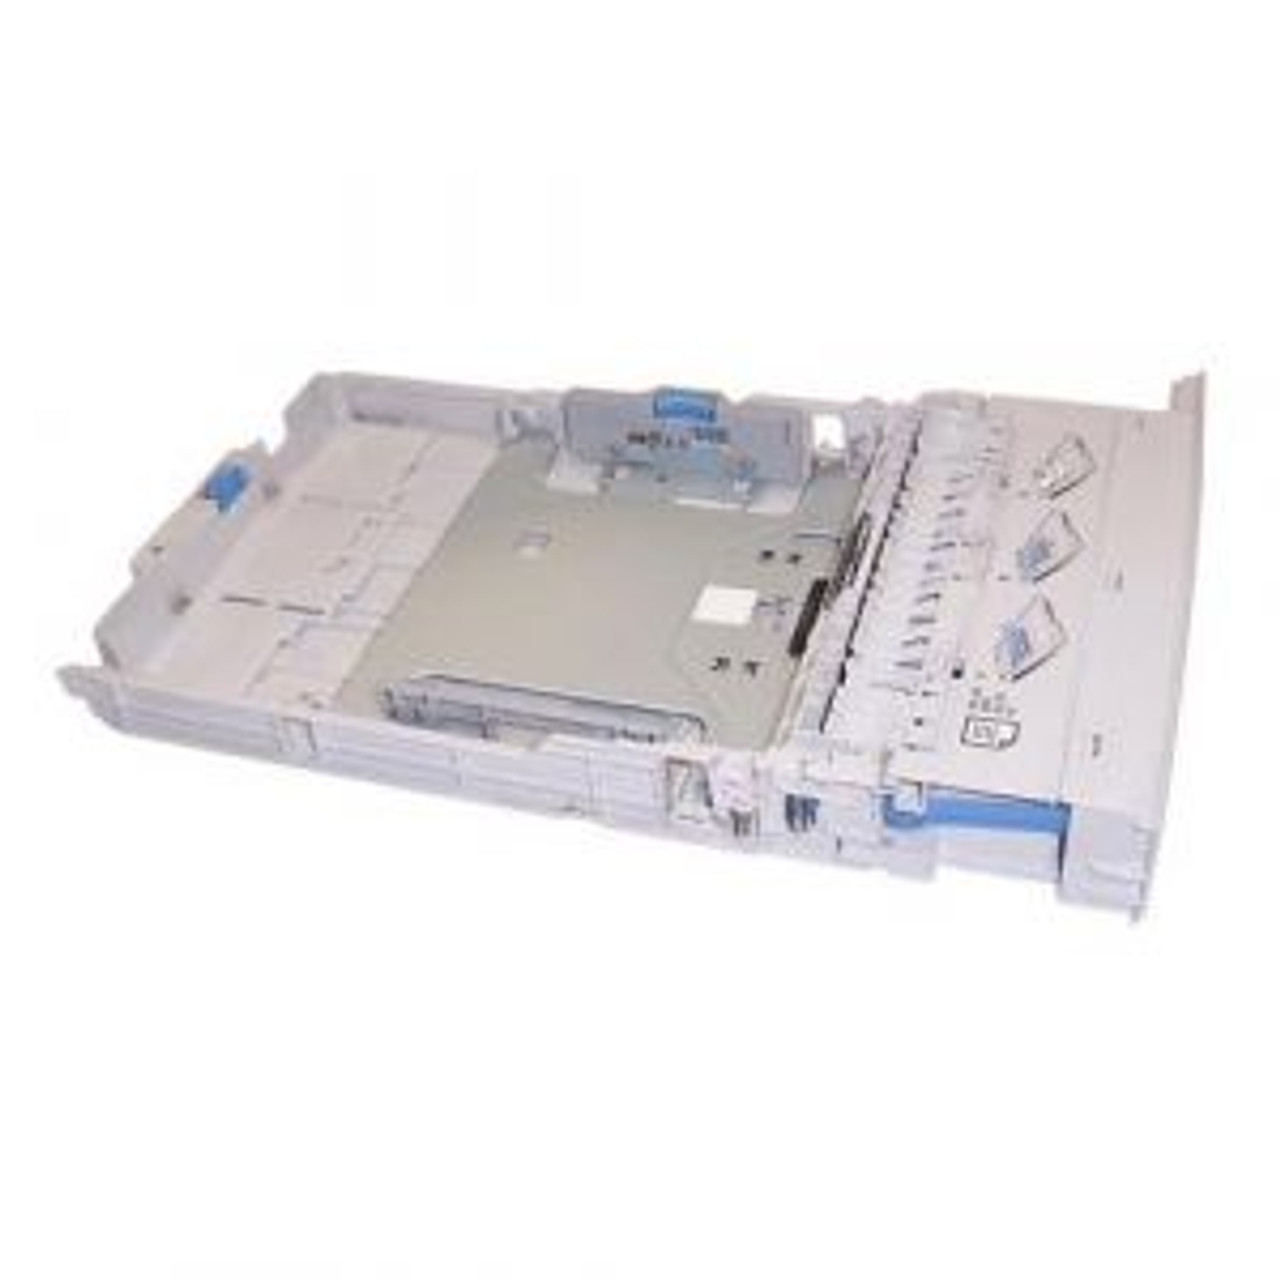 Printers & Cartridges,Printer Accessories,Automatic Document Feeder ADF,HP,C8187-67301